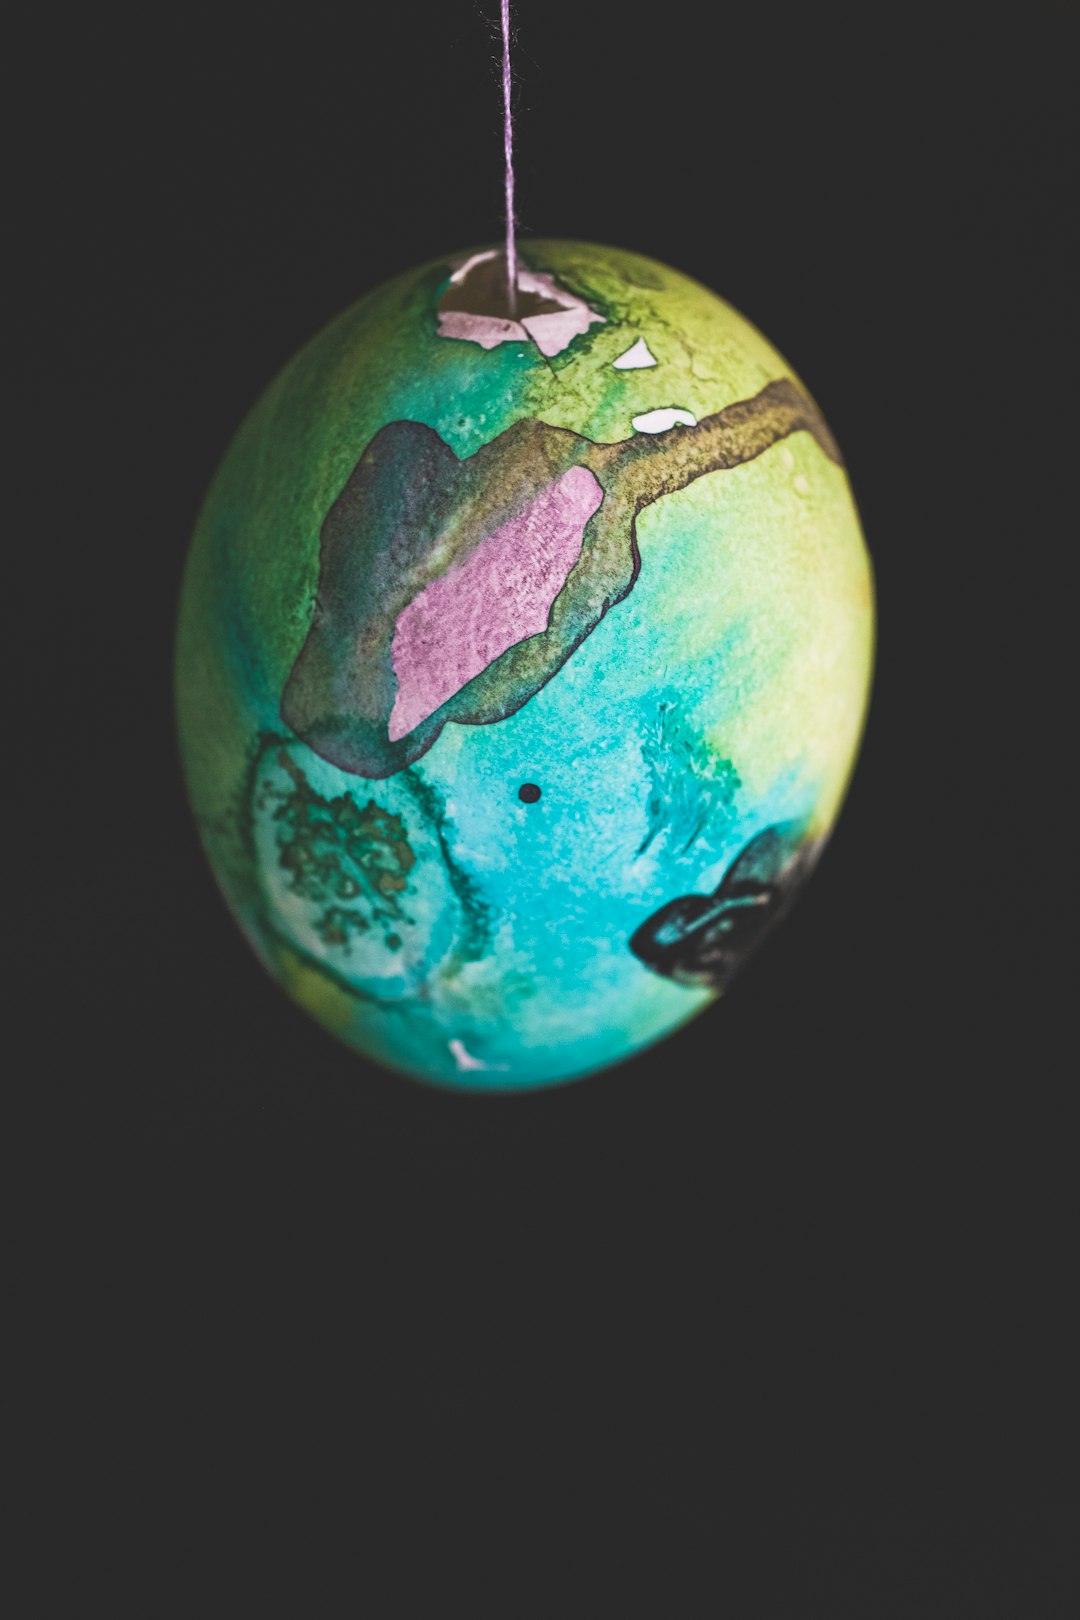 blue and green egg illustration